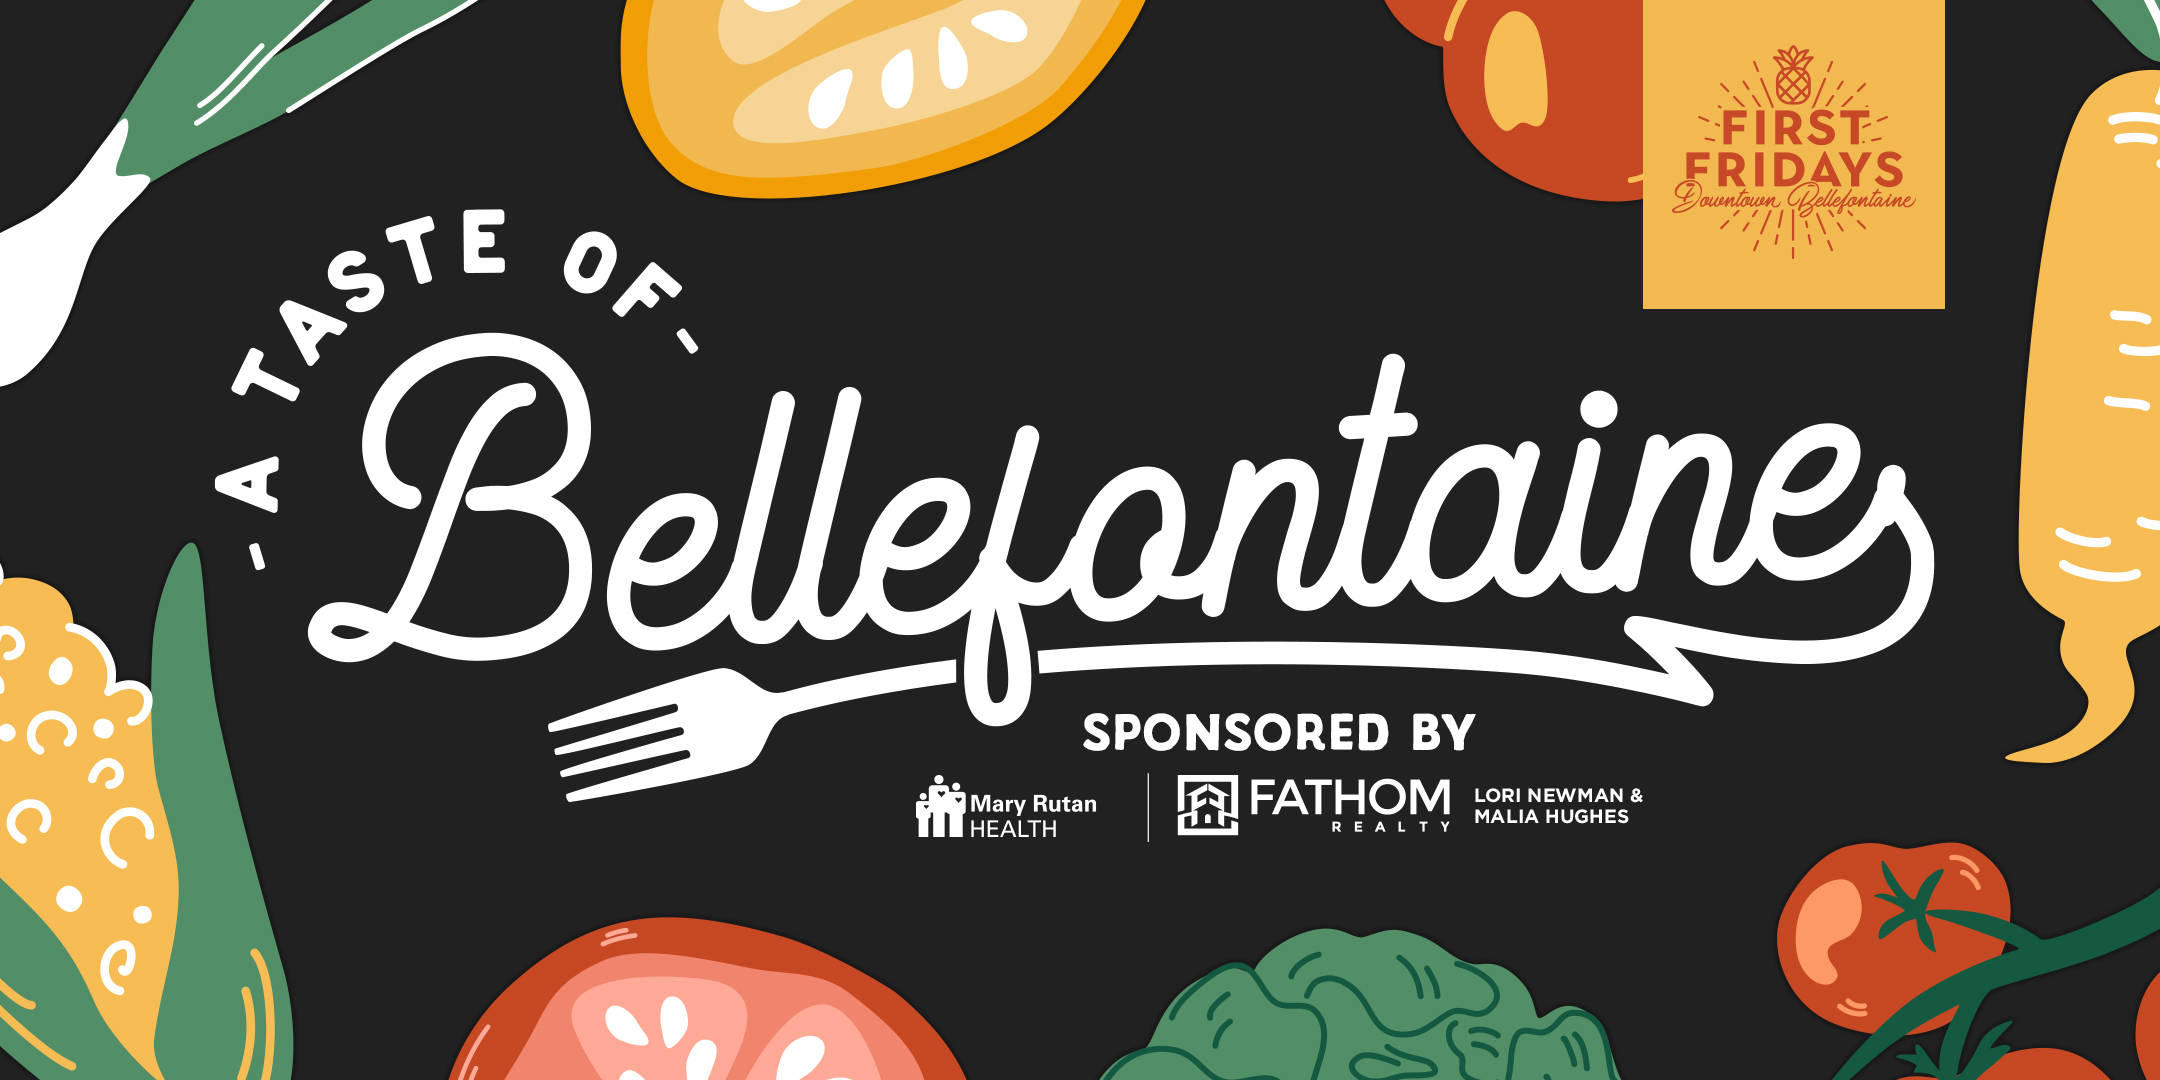 Taste of Bellefontaine presented by Fathom Realty; Lori Newman & Malia Hughes